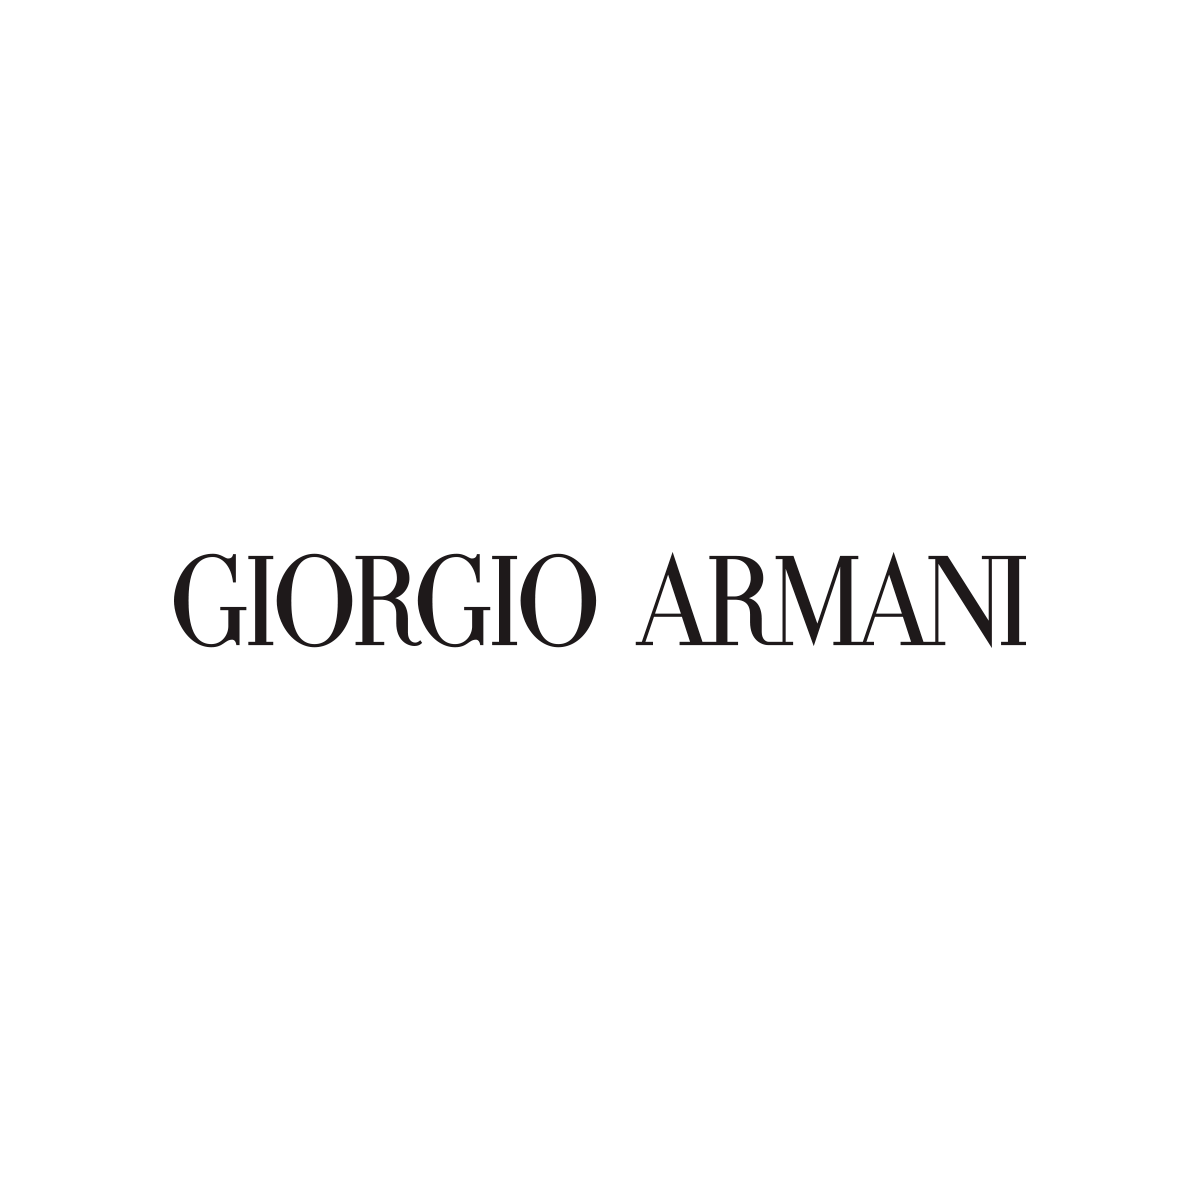 Giorgio Armani in Düsseldorf - Logo